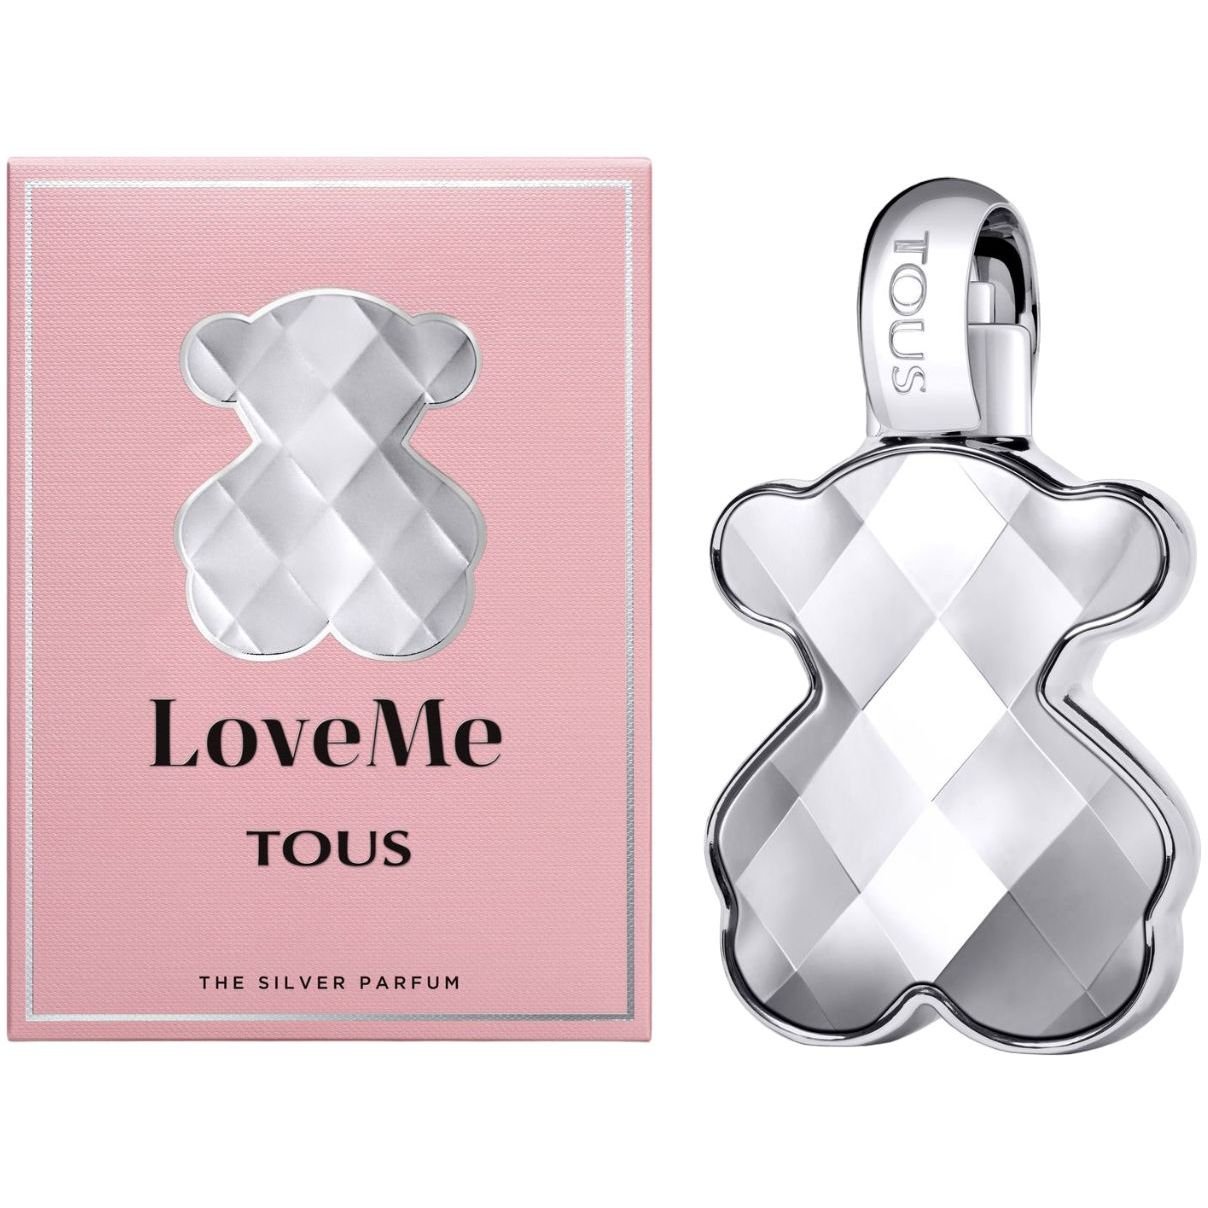 Парфумована вода для жінок Tous LoveMe The Silver Parfum, 50 мл - фото 1